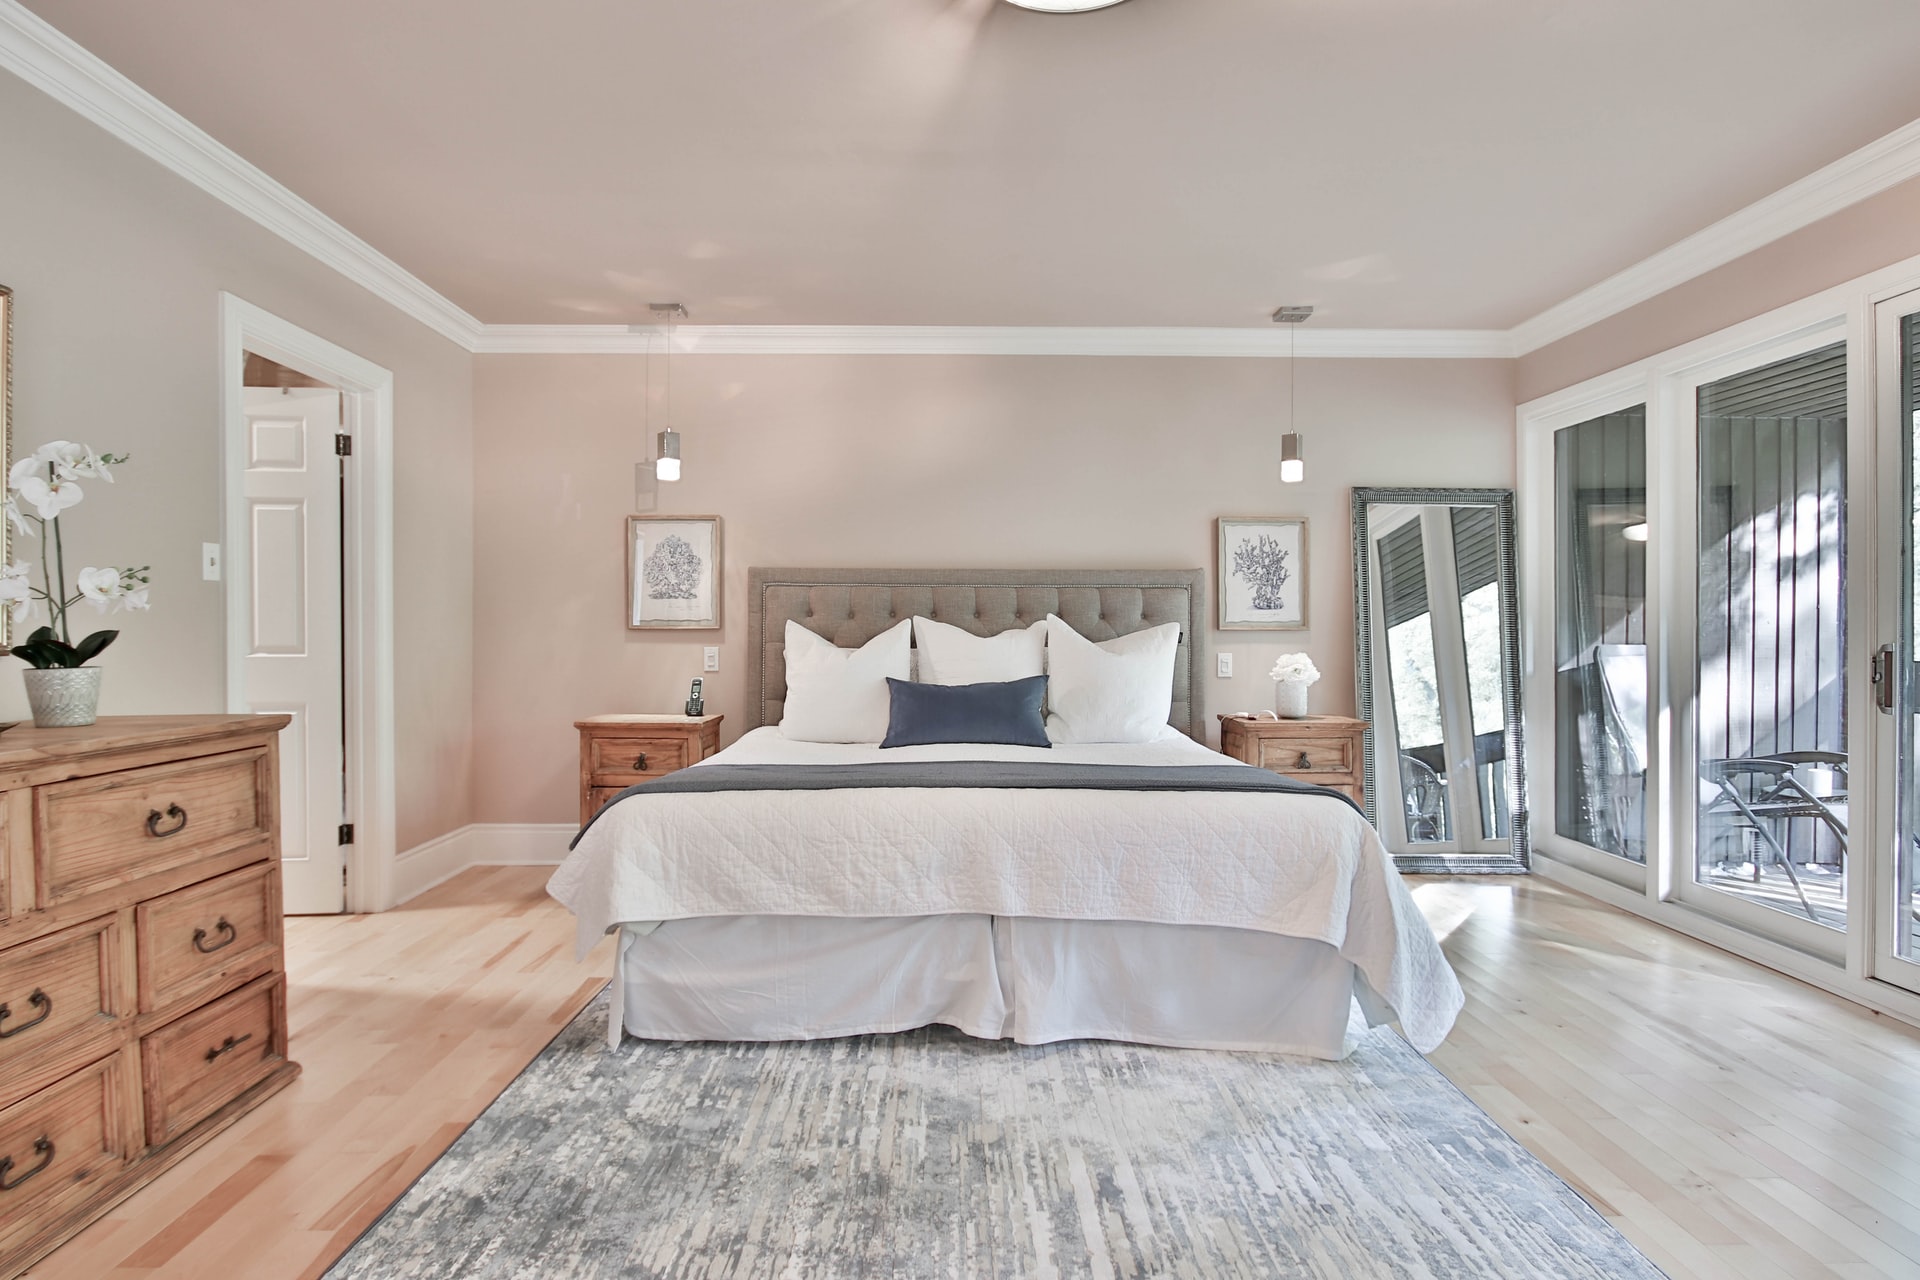 Спалното бельо – стилен елемент от интериорния декор